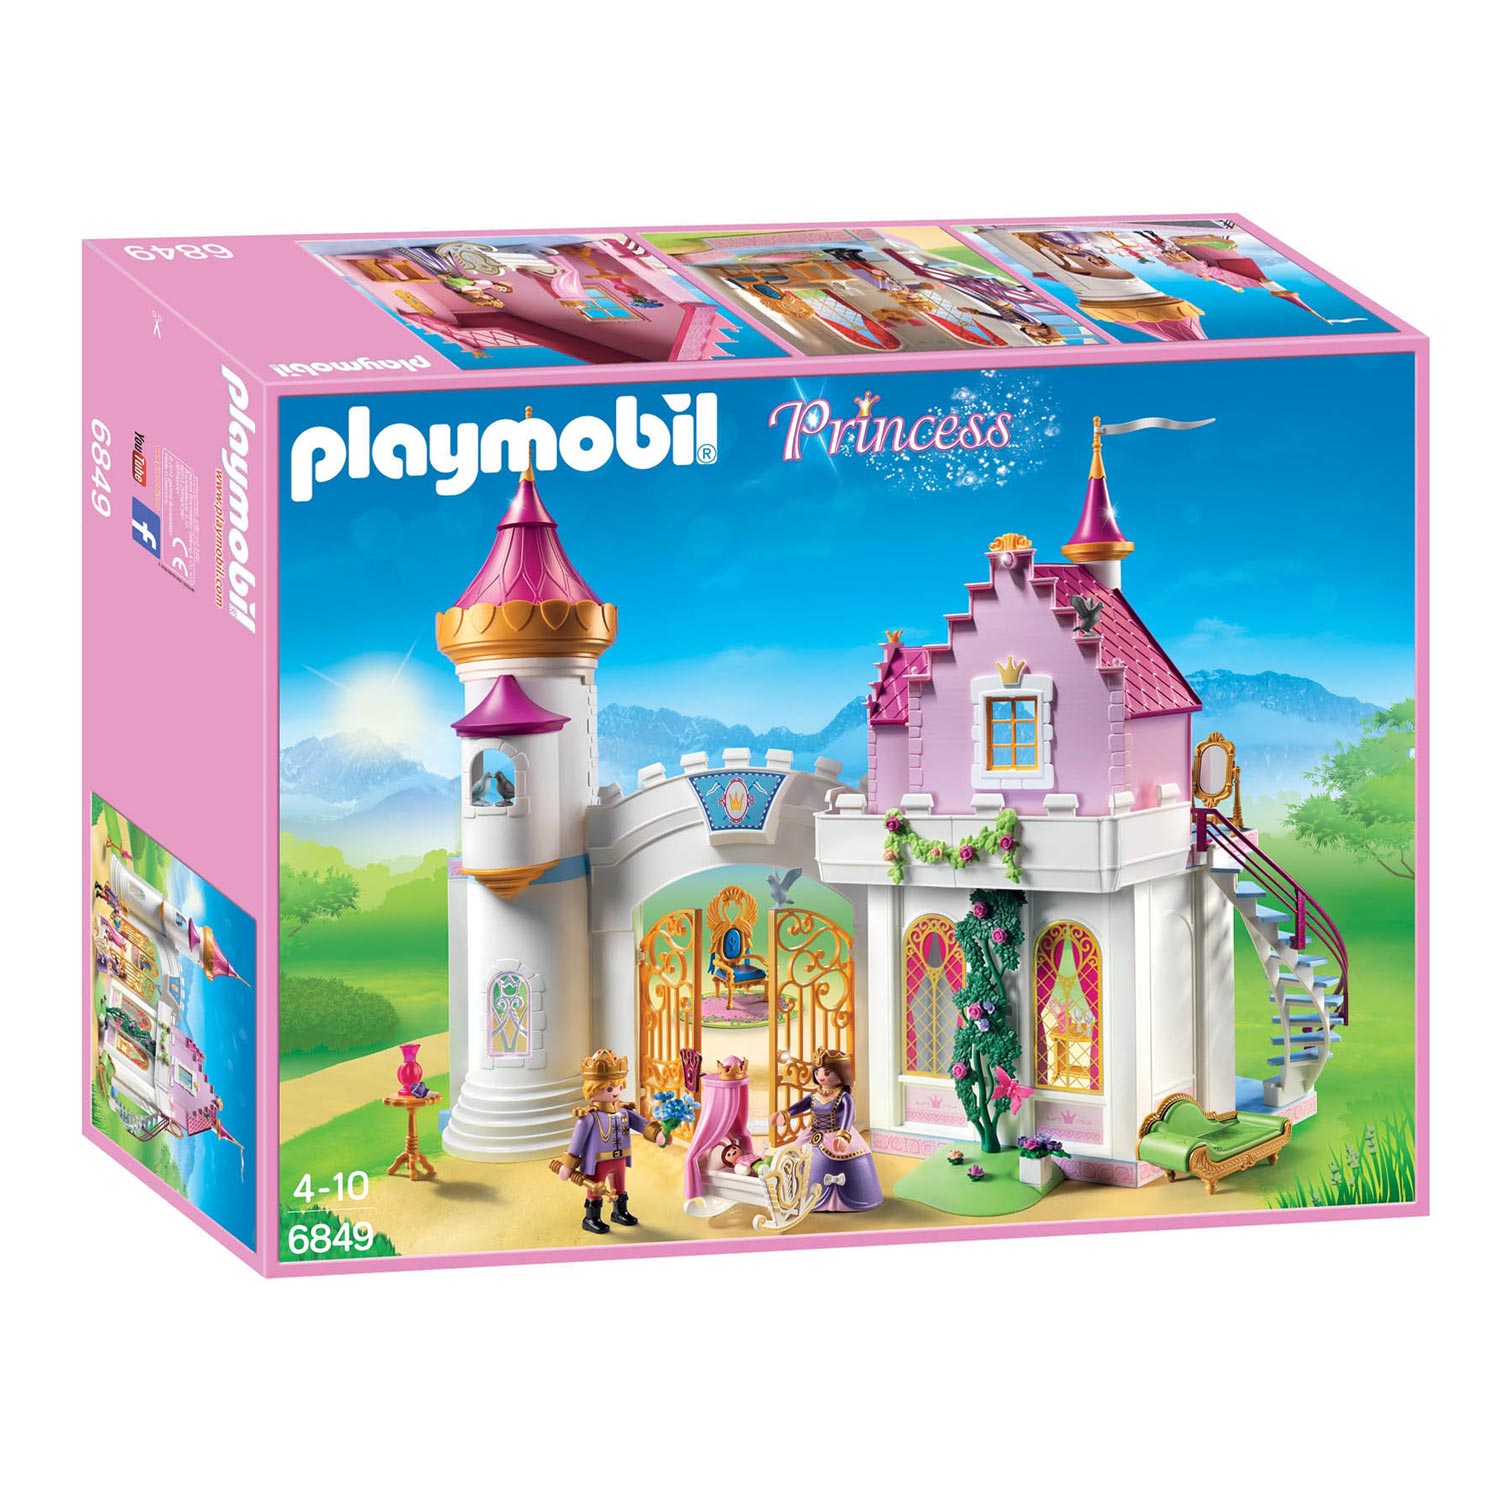 Playmobil Princess Royal Lock - 6849 | Thimble